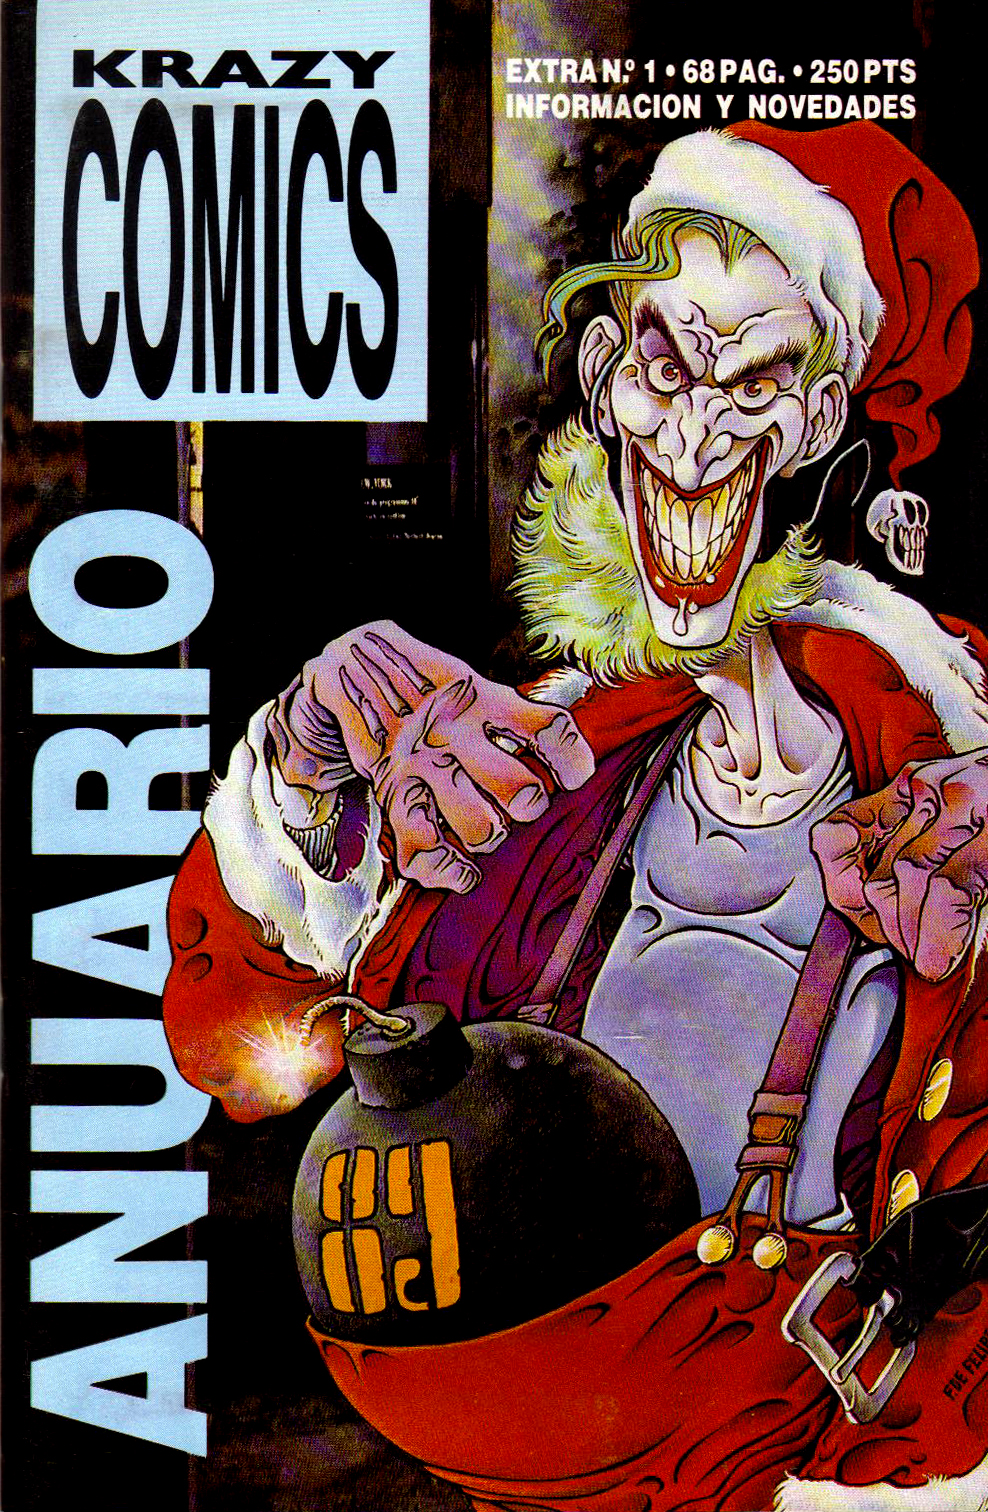 The Joker for a magazine cover